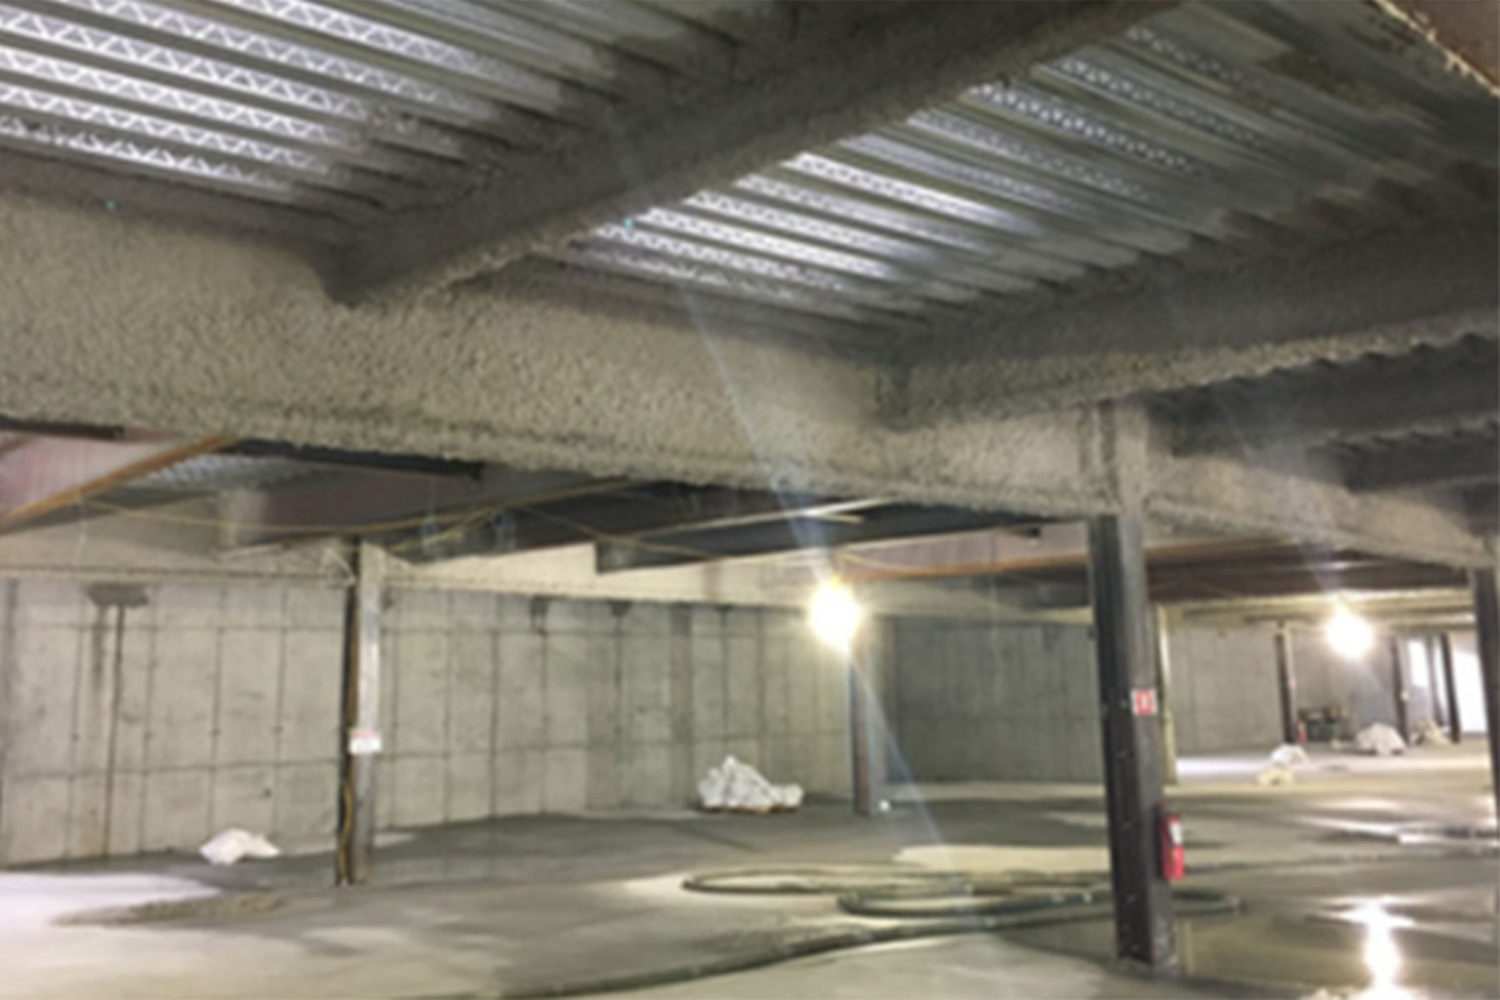 Parking garage area with concrete pillars 